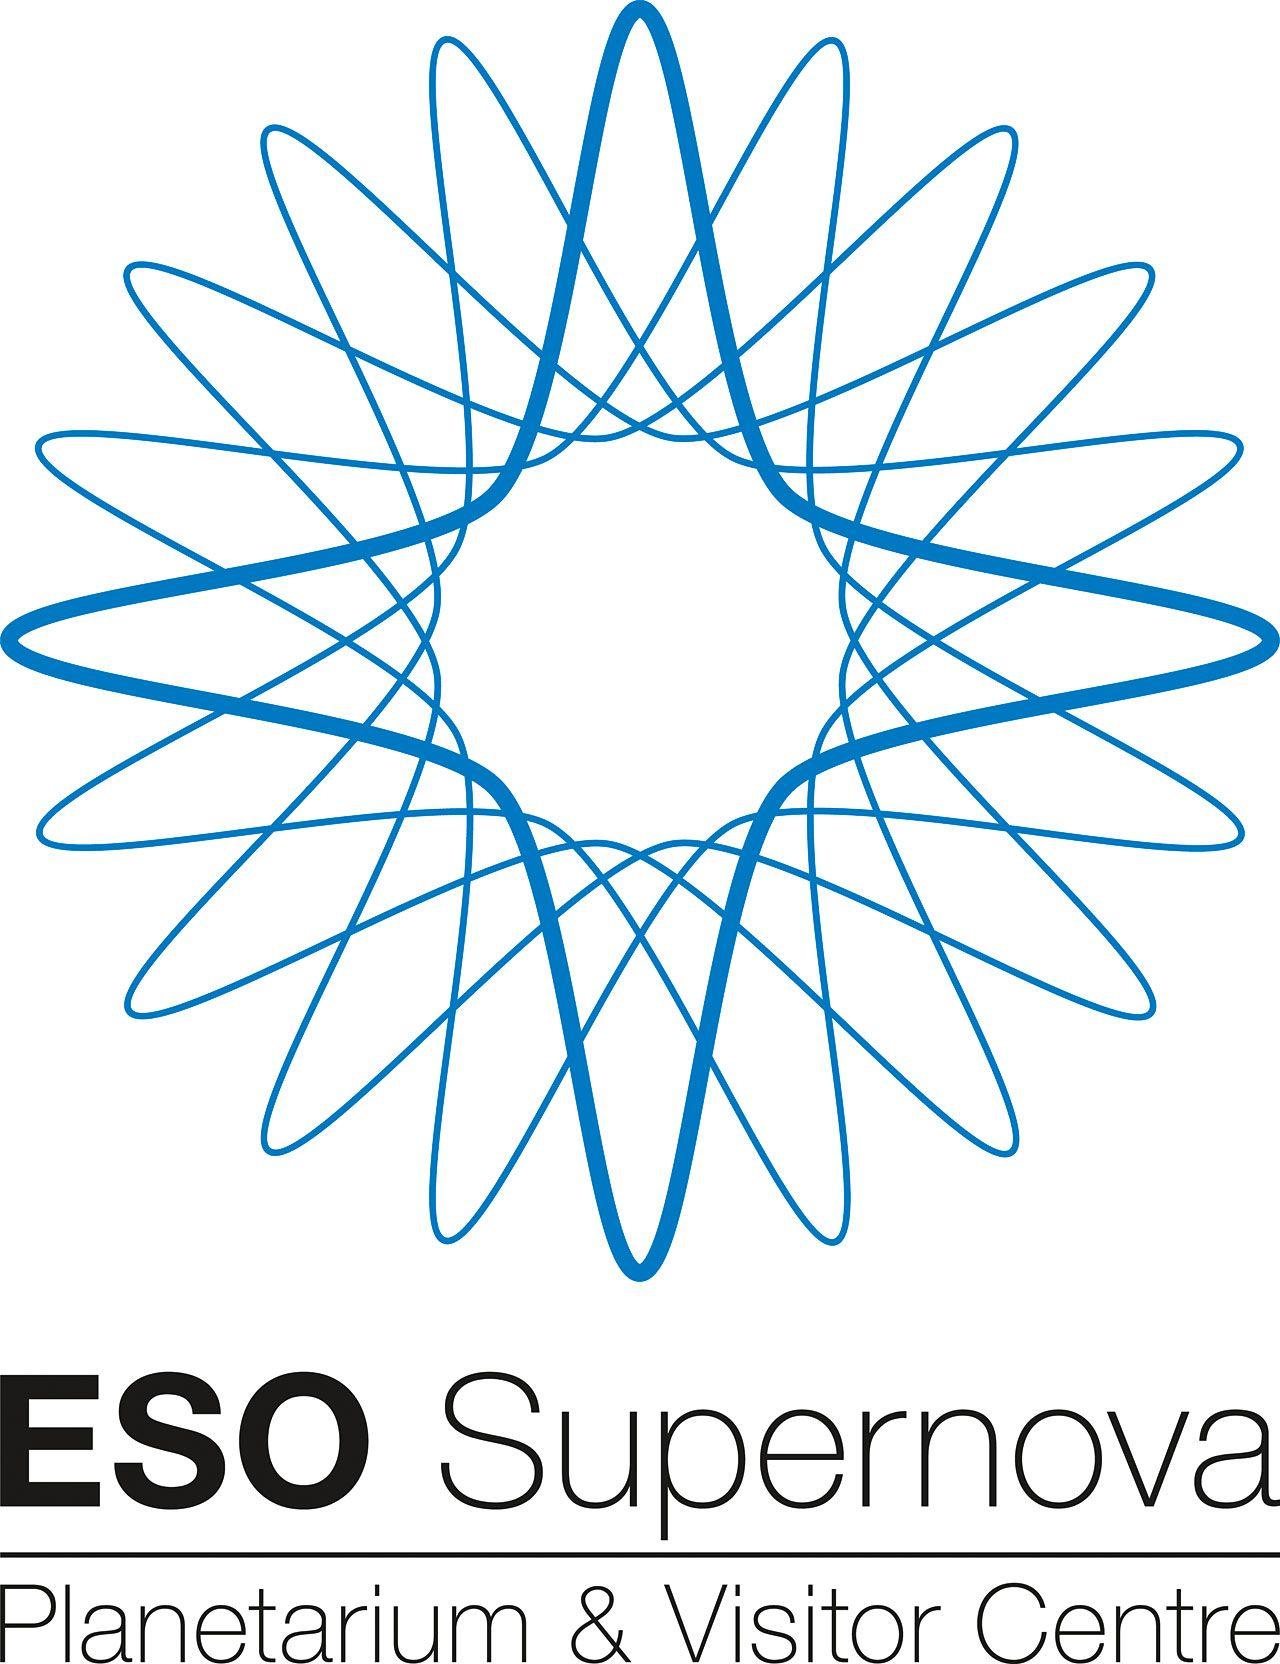 Supernova Logo - About the logo — ESO Supernova